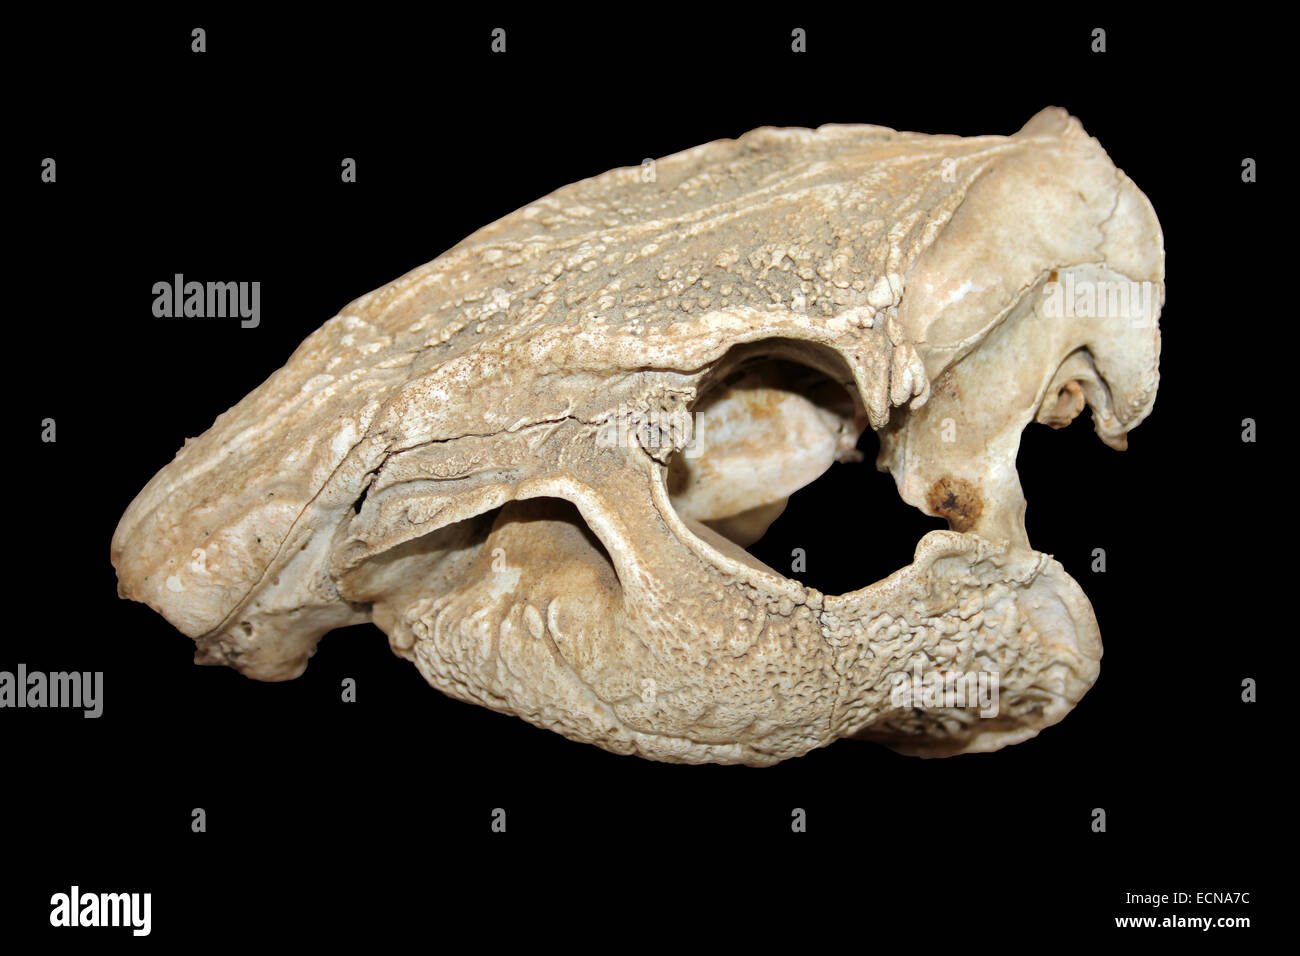 Lowland Paca Cuniculus paca Skull Stock Photo